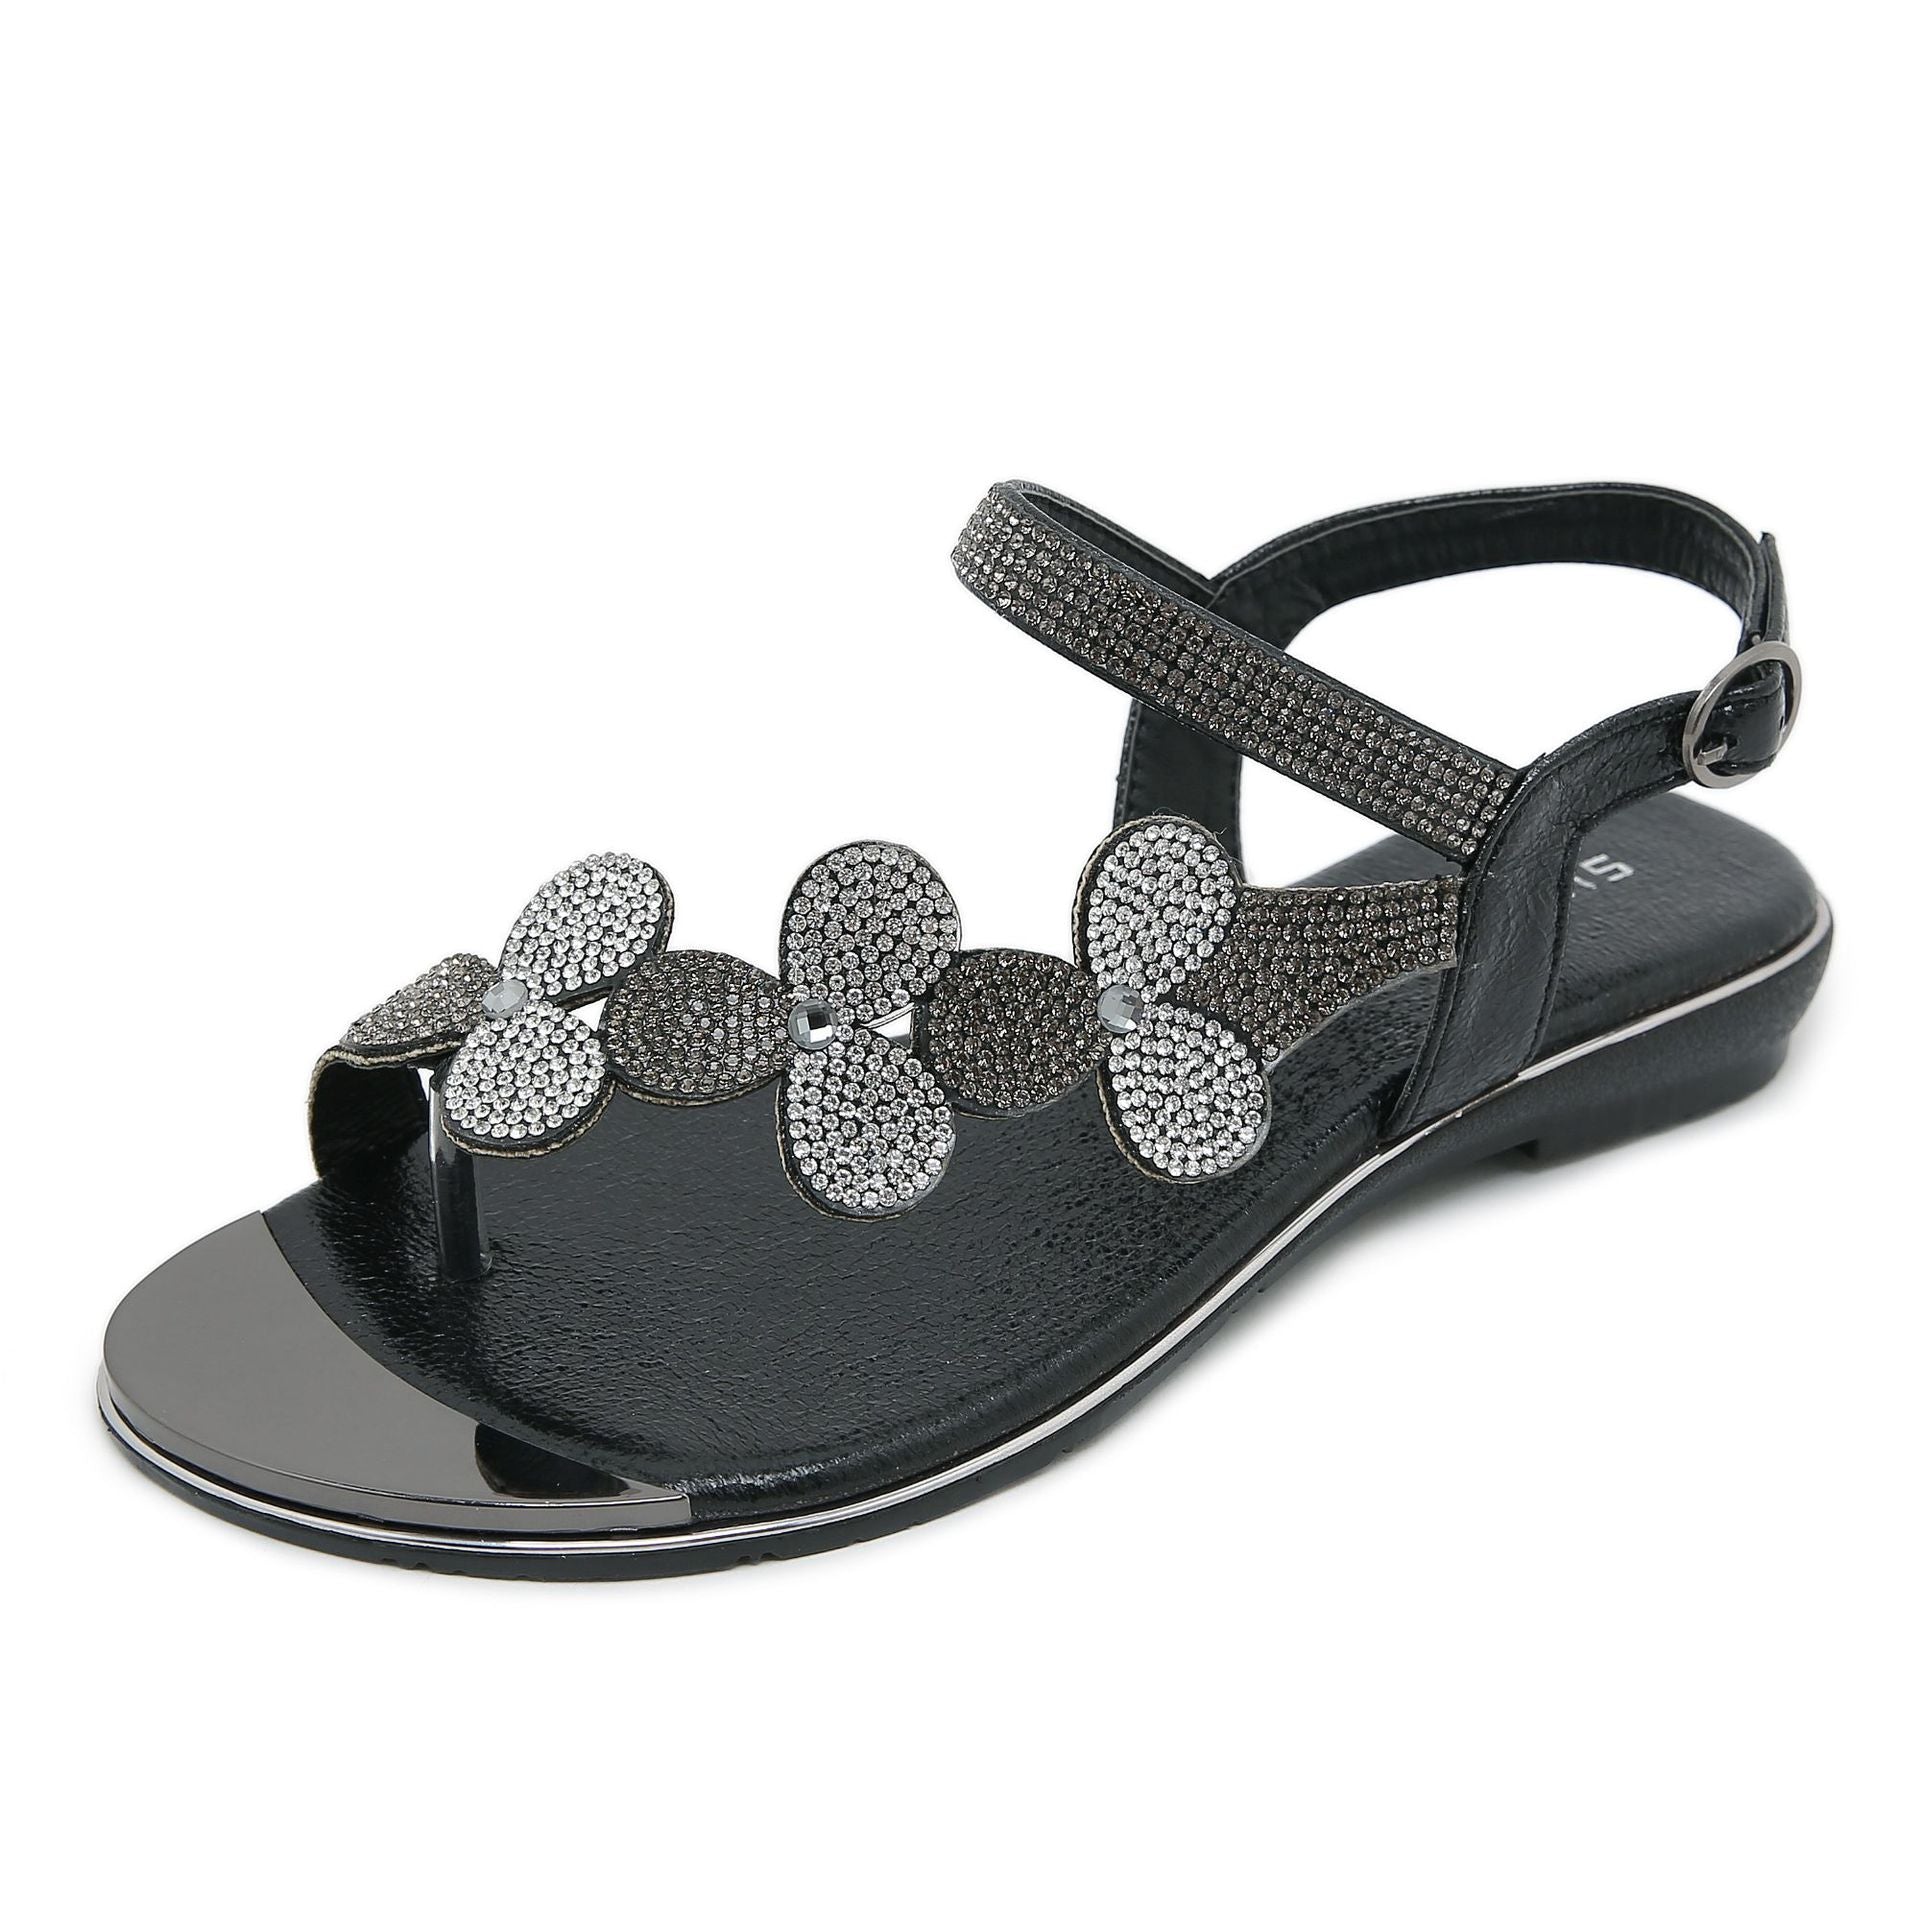 Owlkay Rhinestone Comfortable Versatile Flat Sandals